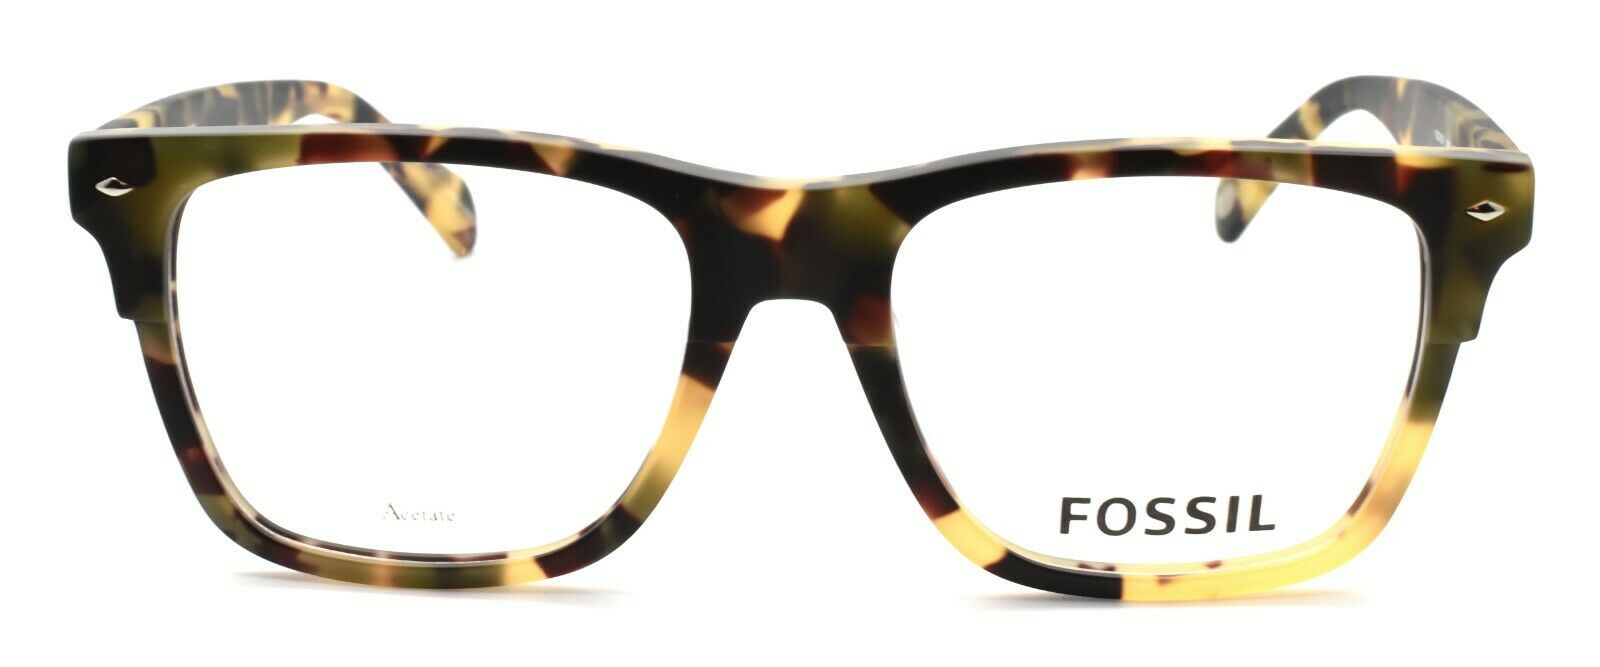 2-Fossil FOS 7031 2M6 Men's Eyeglasses Frames 52-18-140 Matte Green Havana + CASE-716736064697-IKSpecs